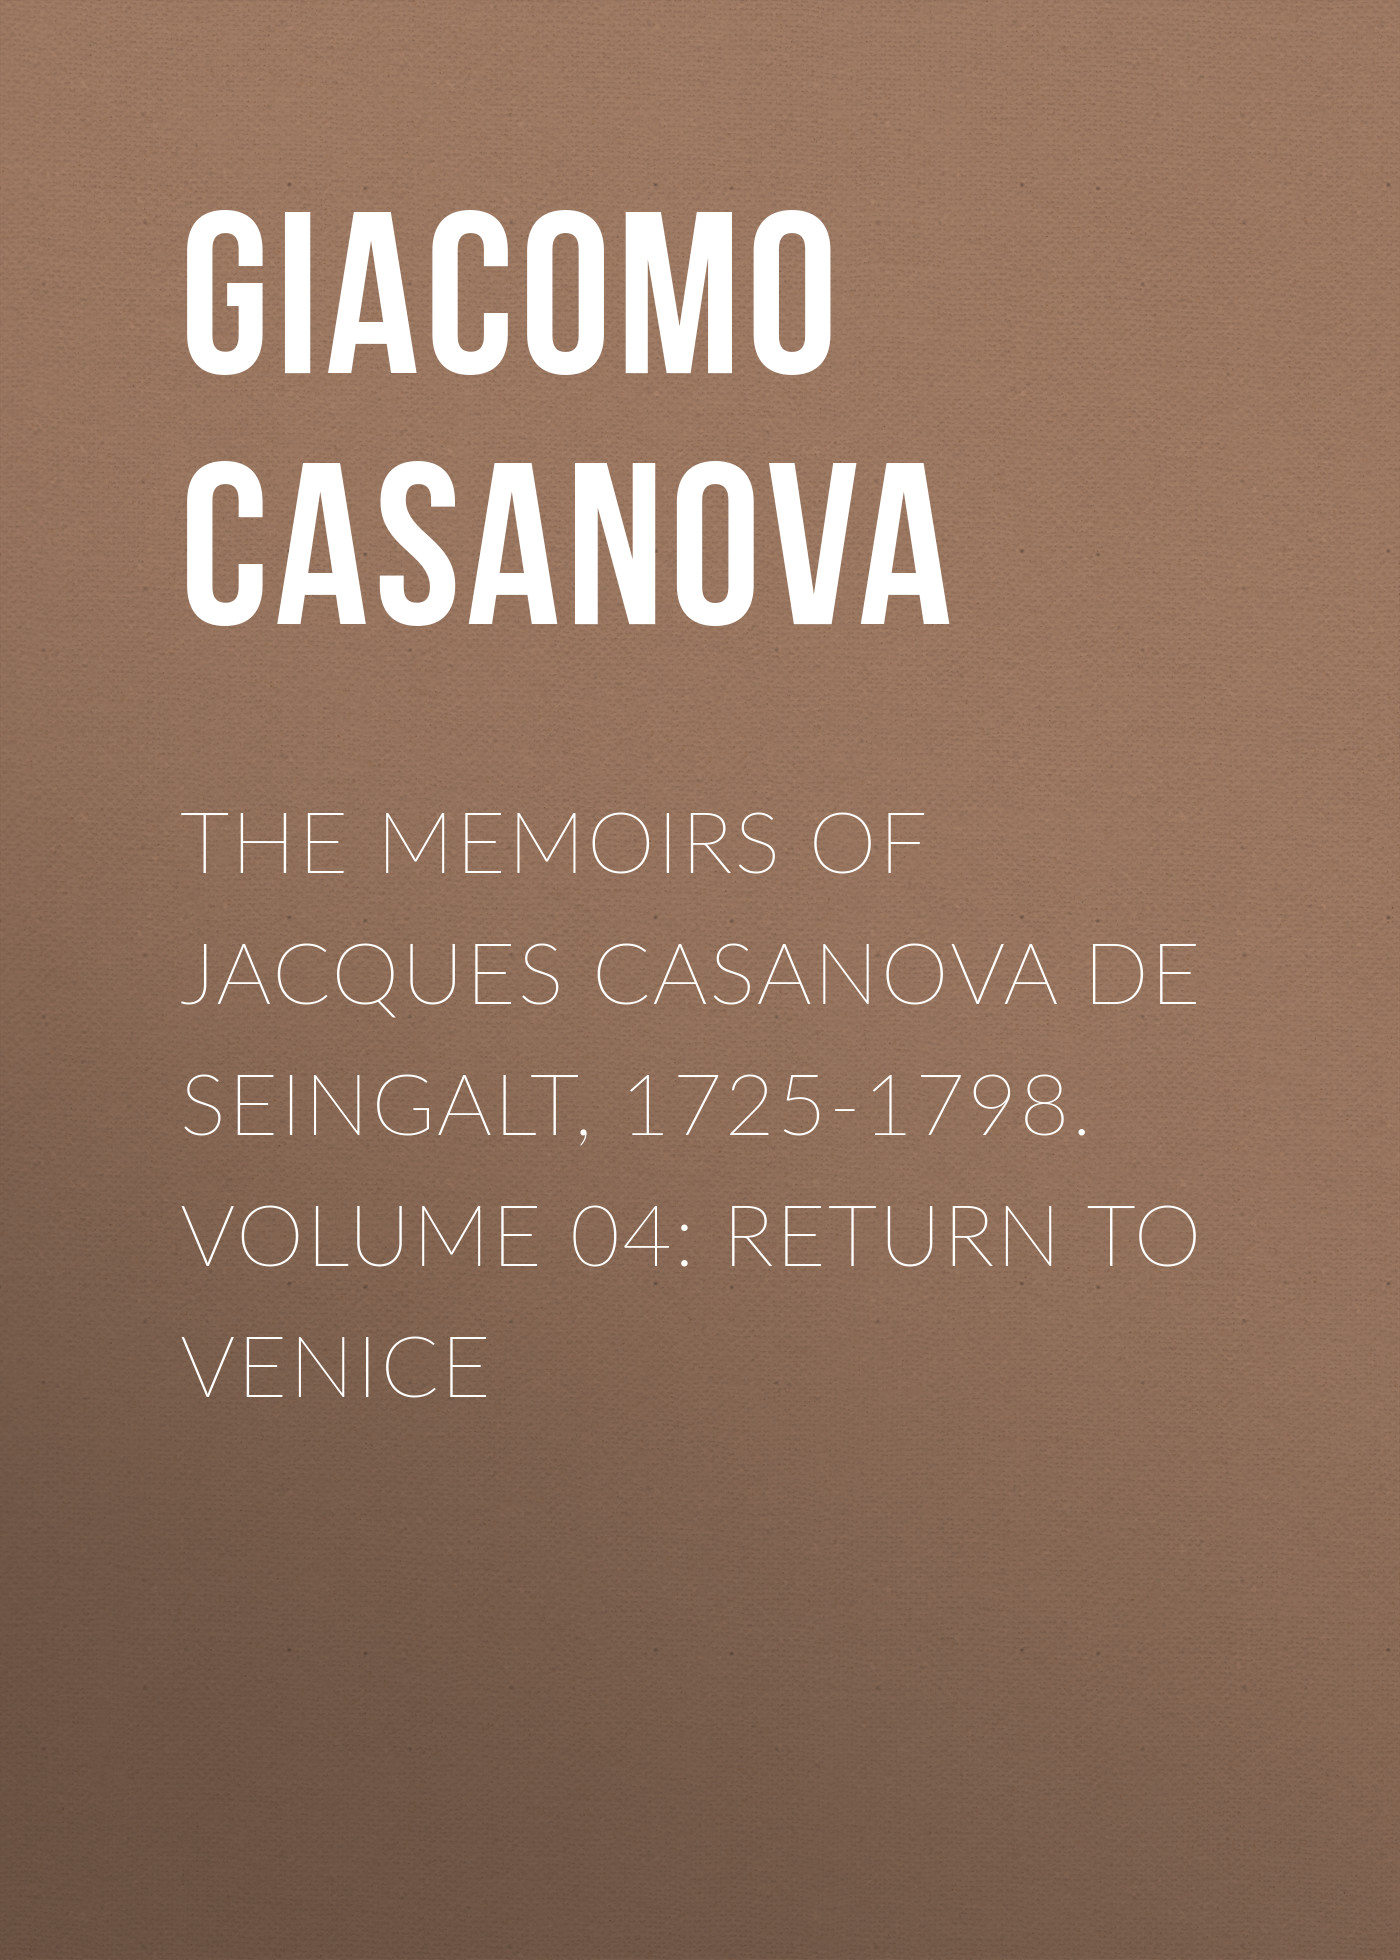 The Memoirs of Jacques Casanova de Seingalt, 1725-1798. Volume 04: Return to Venice